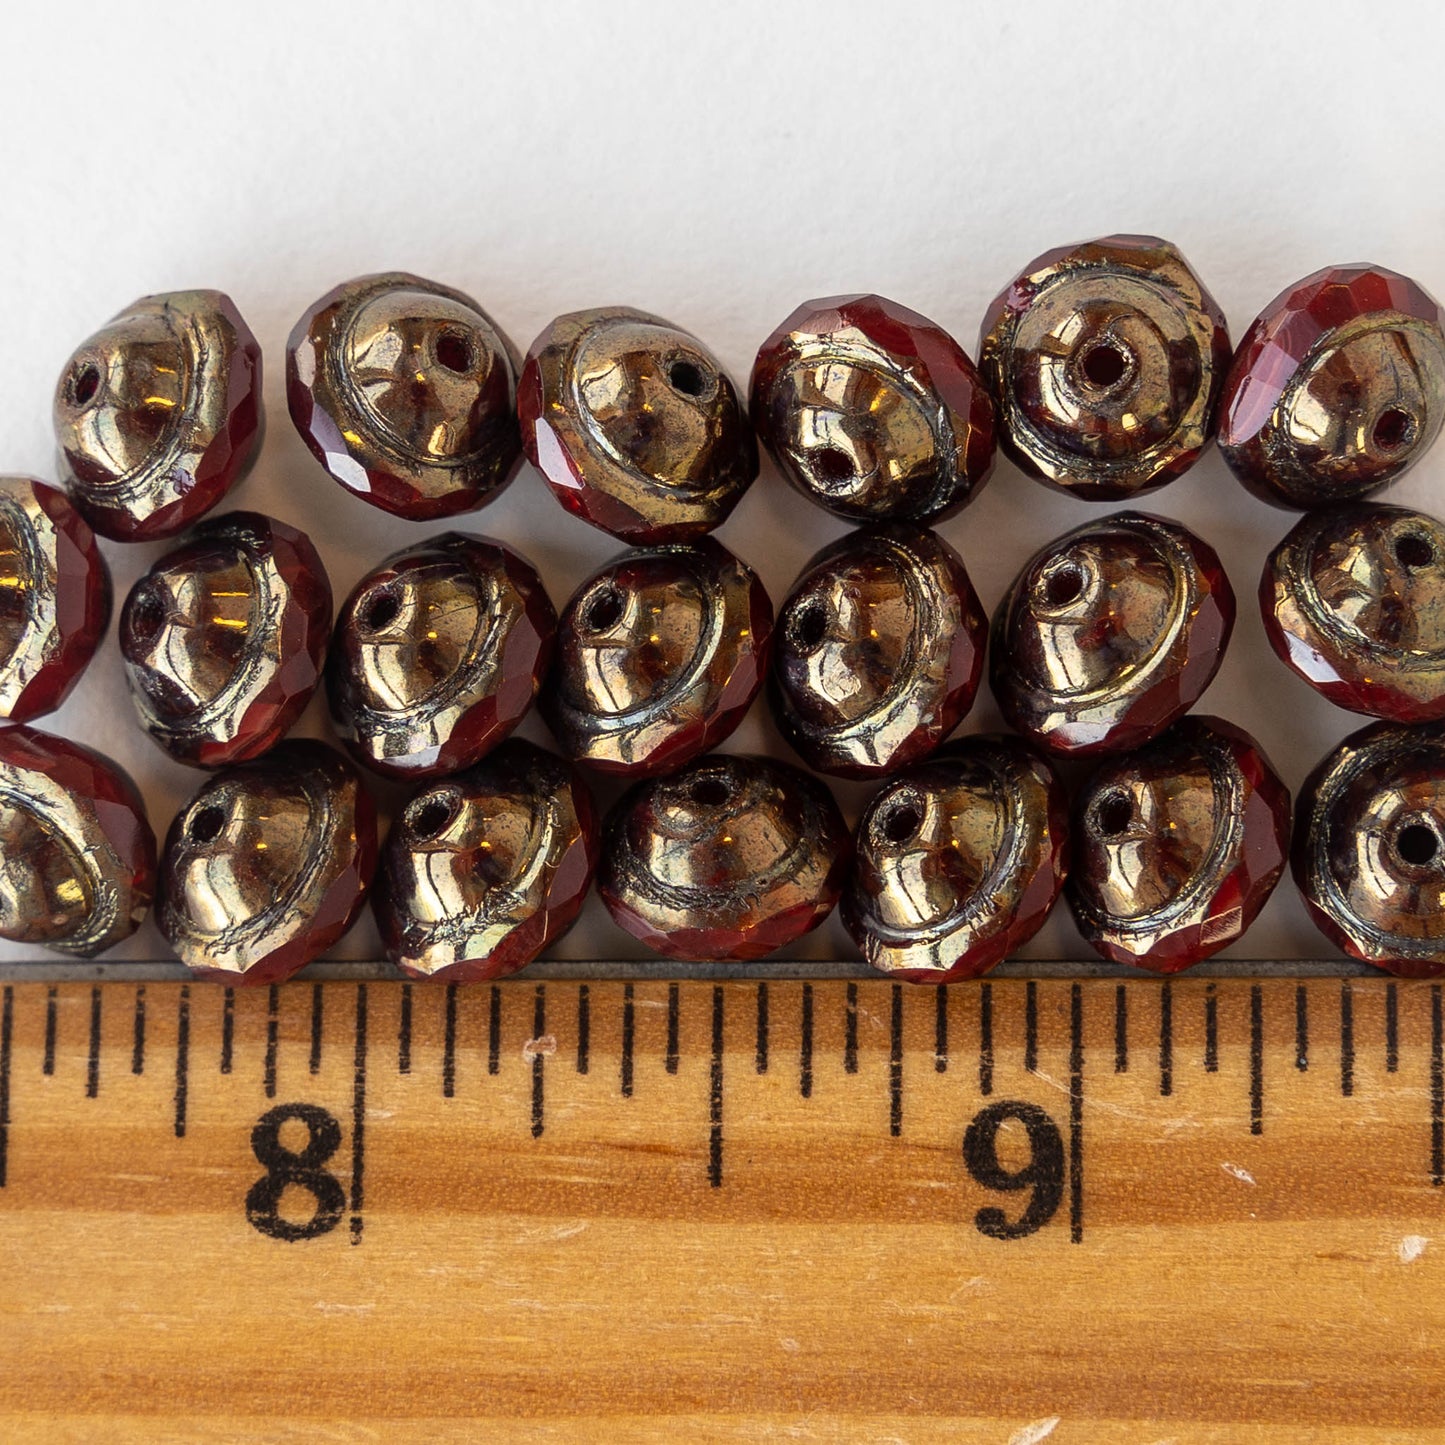 8x10mm Saturn Beads - Crimson Red with Bronze Finish - 10 Beads